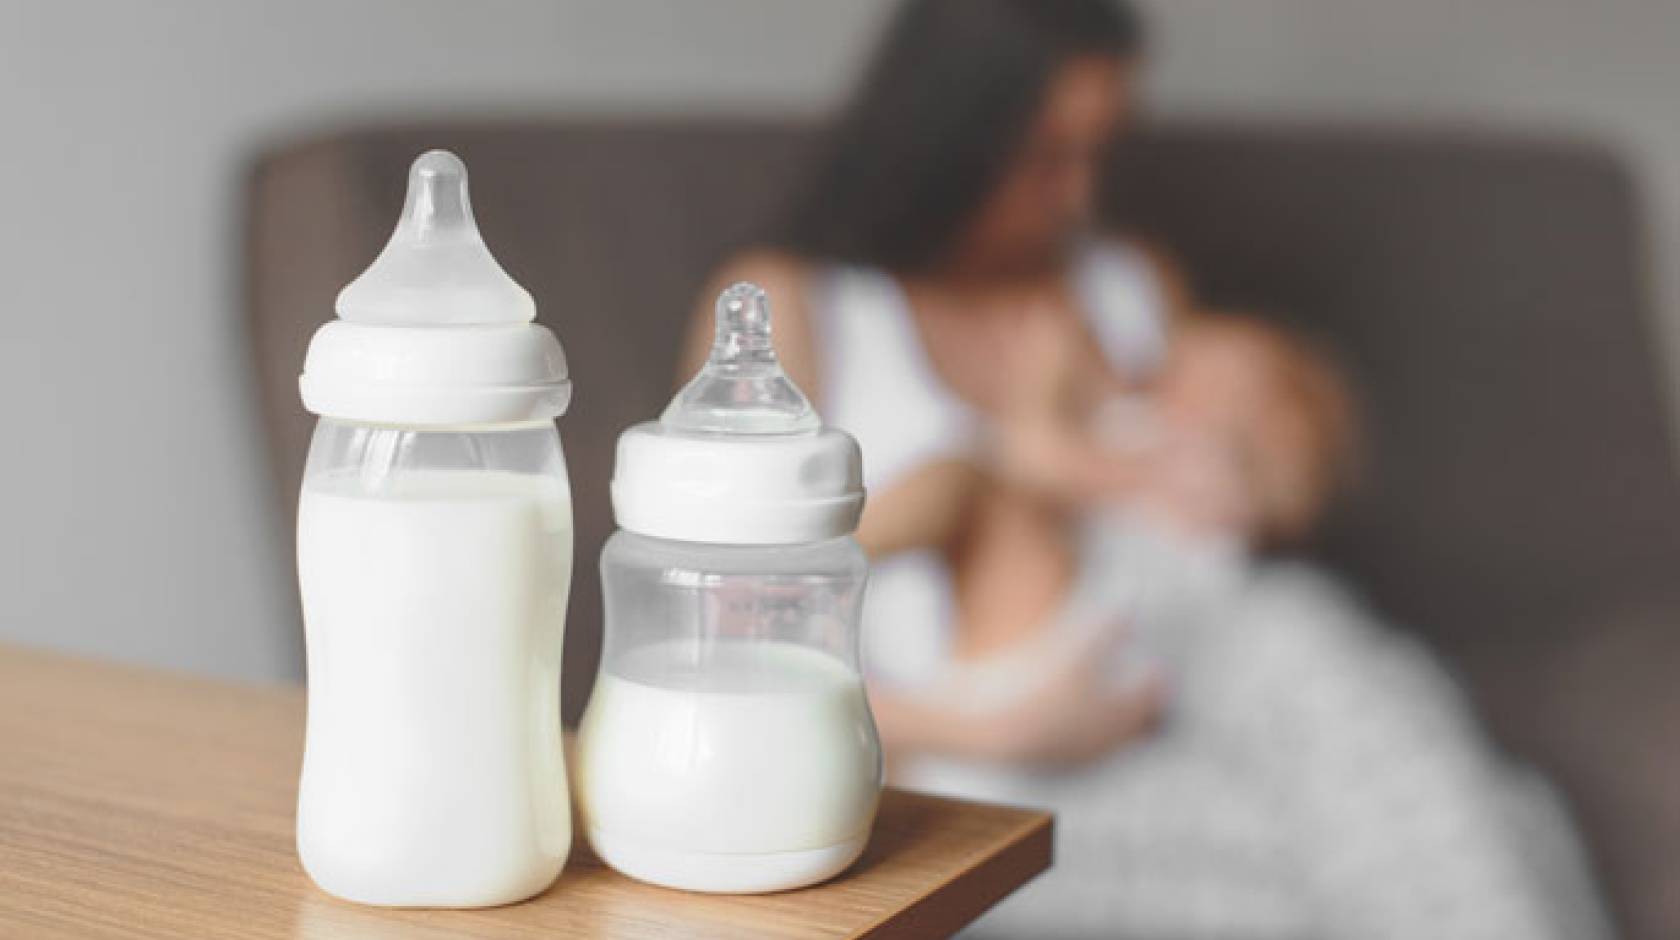 Breastmilk bottles in front of a mother breastfeeding